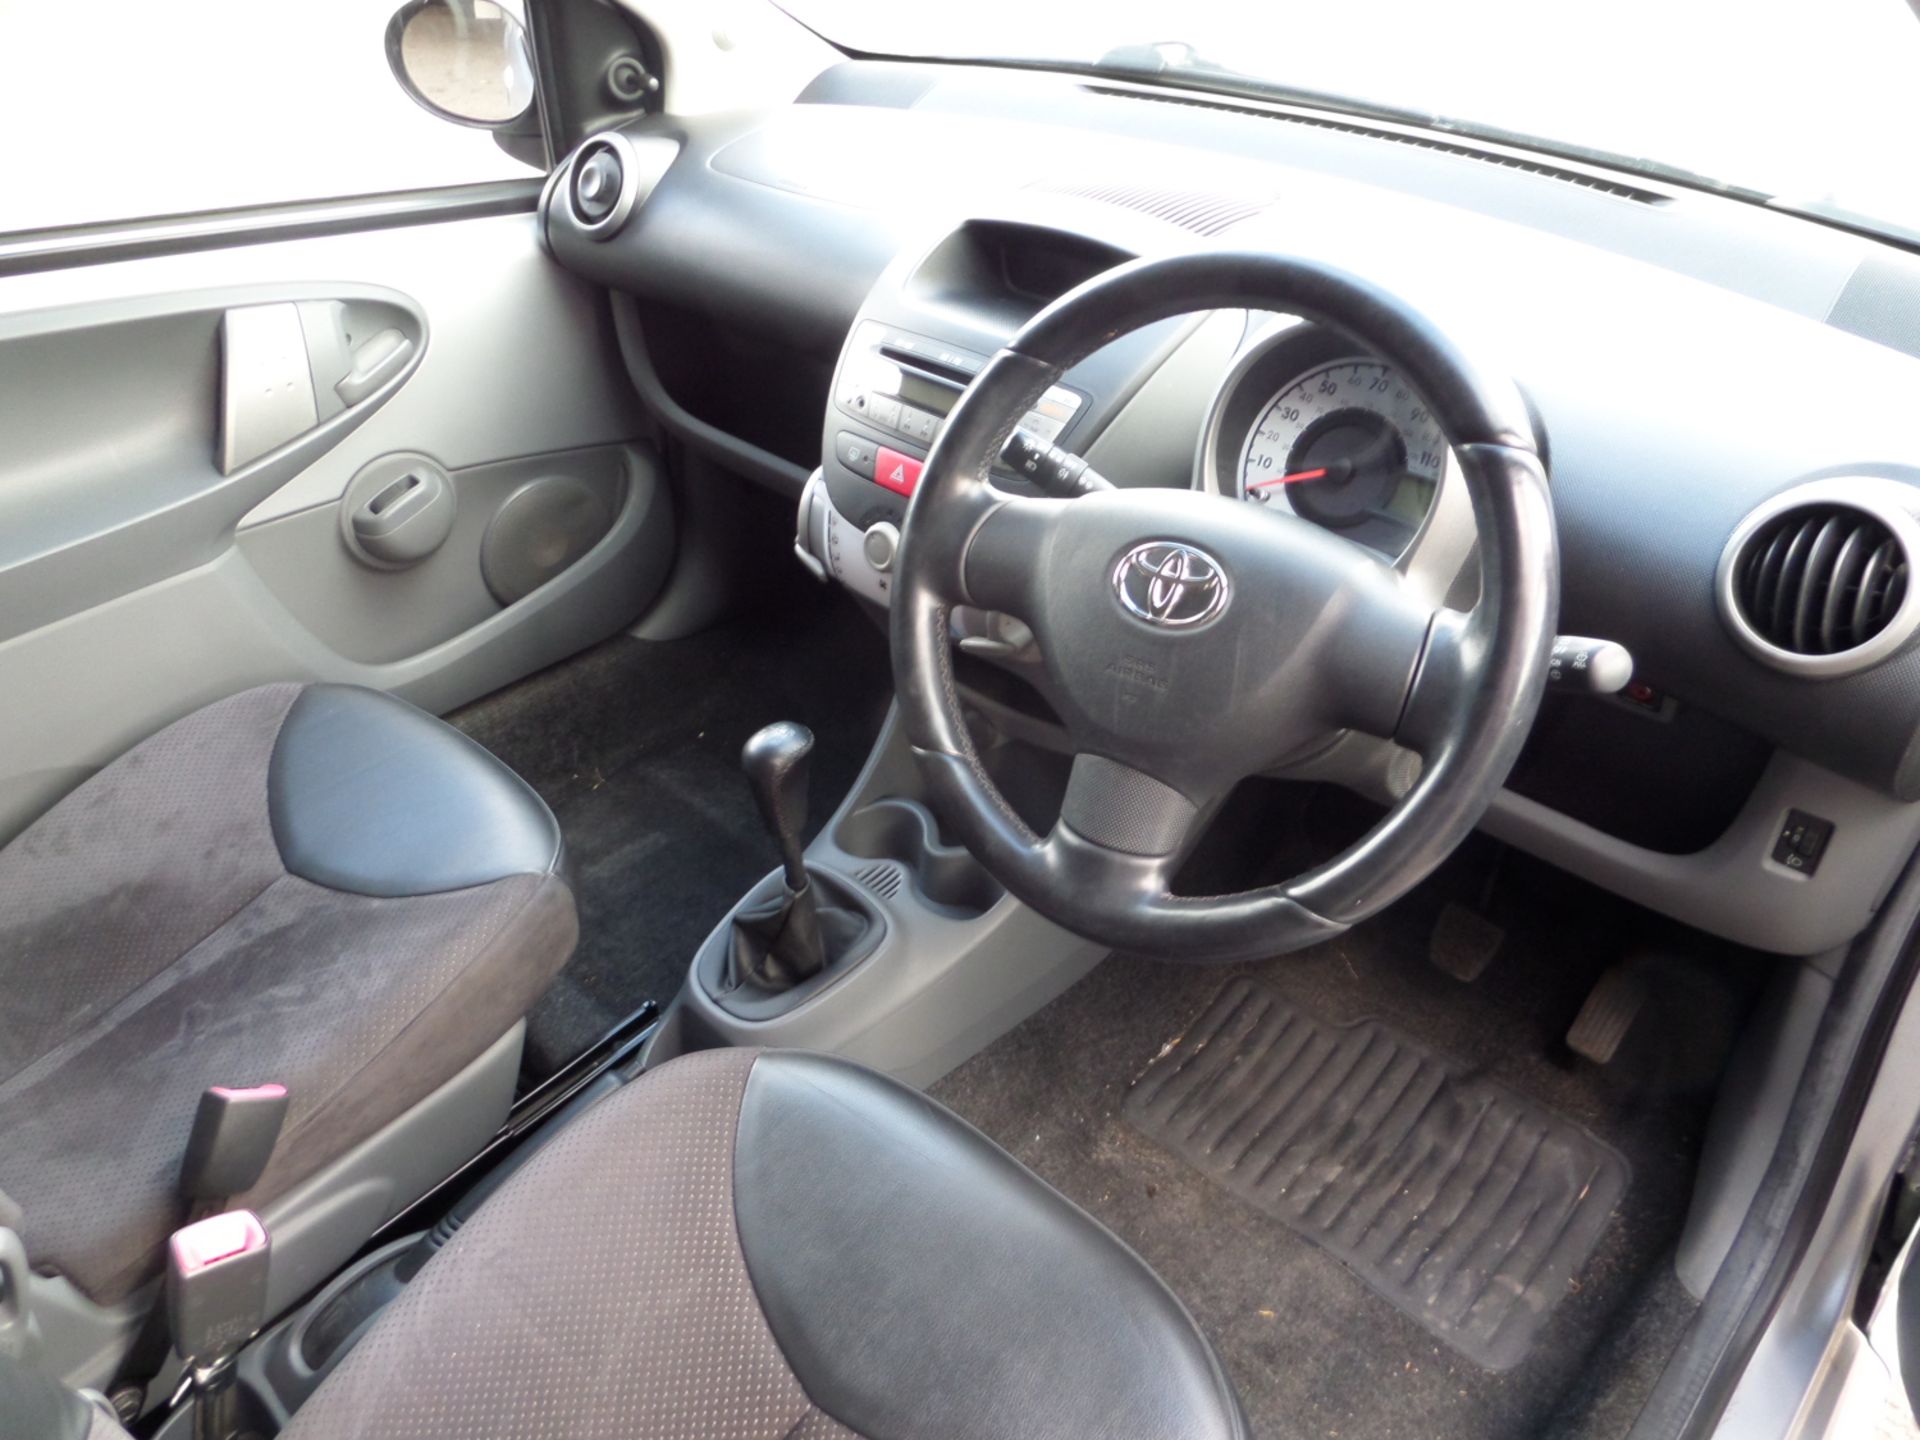 Toyota Aygo Platinum Vvt-i - 998cc 3 Door - Image 6 of 7